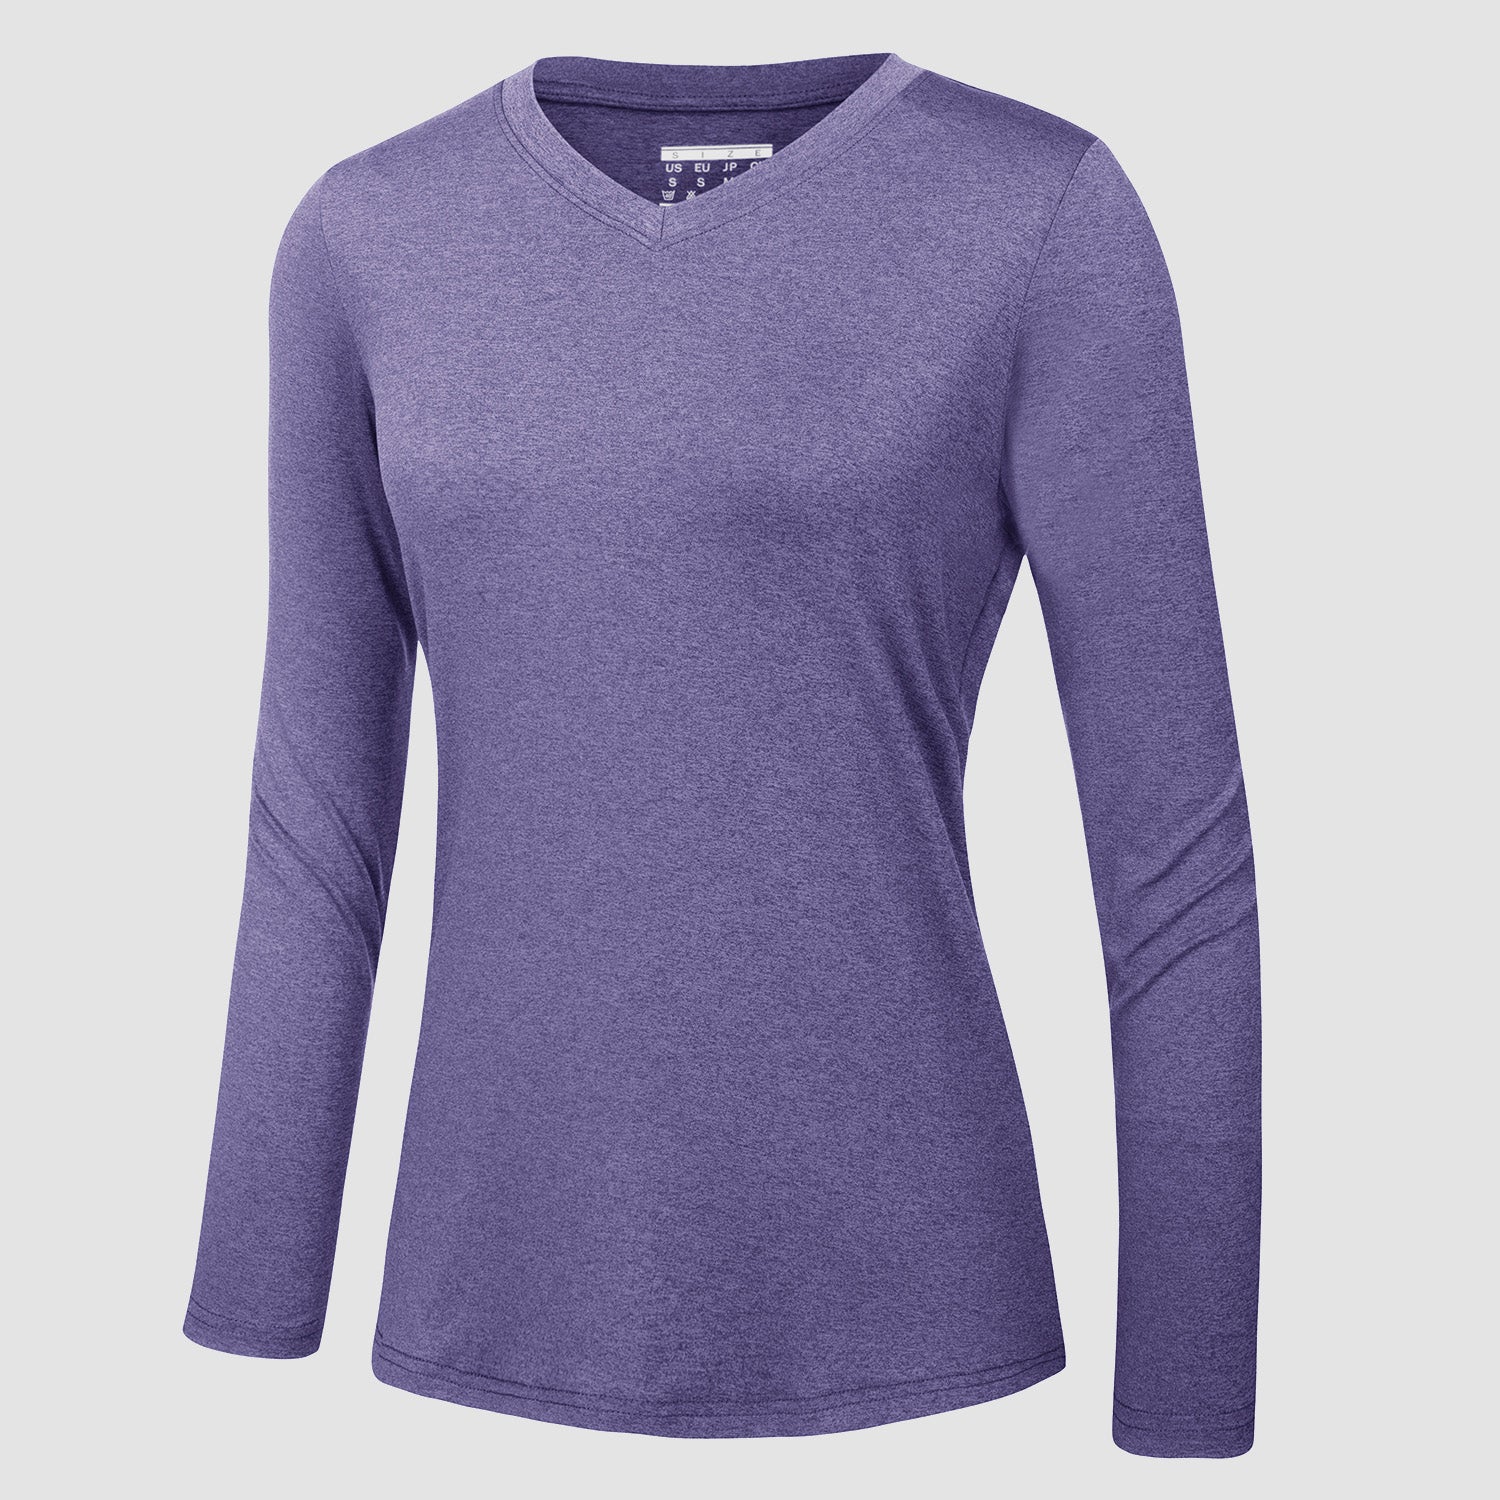 Women's Long Sleeve Shirt V Neck SPF Shirts UPF 50+ Quick Dry Workout Hiking Tee Shirts Rashguard, Jade Green / M